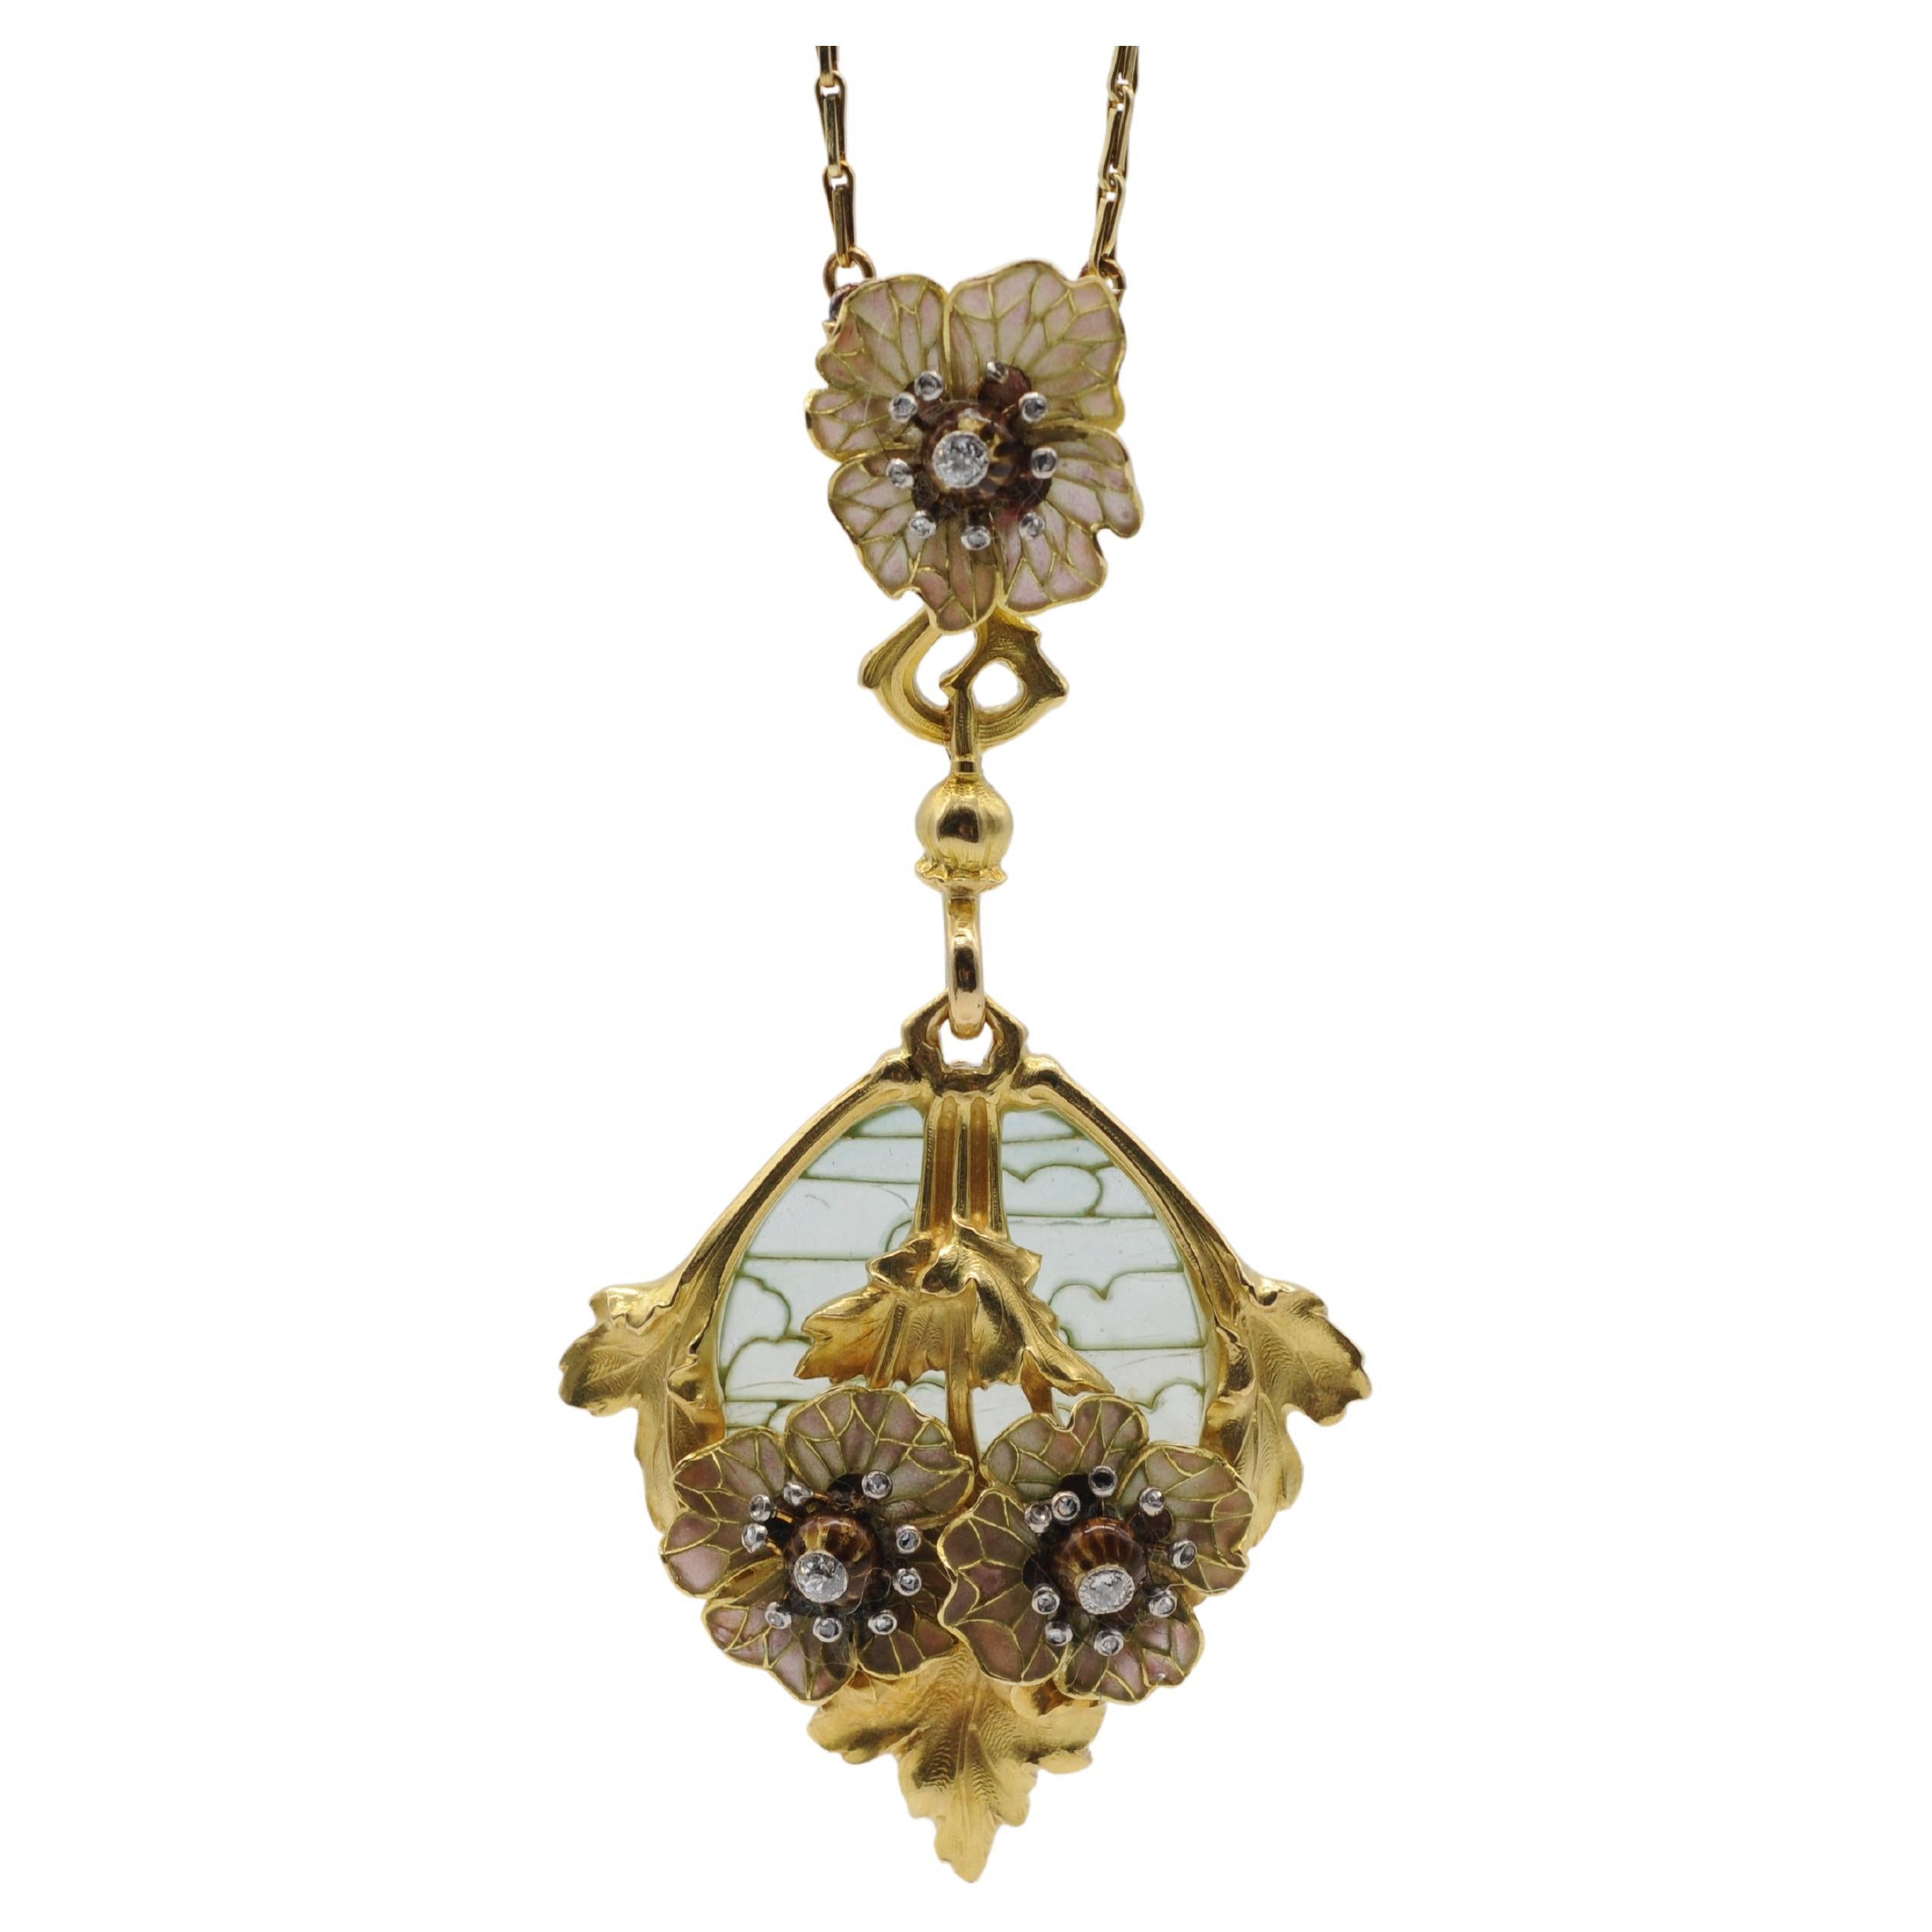 Art Nouveau elaborate artistic necklace with diamonds and gold